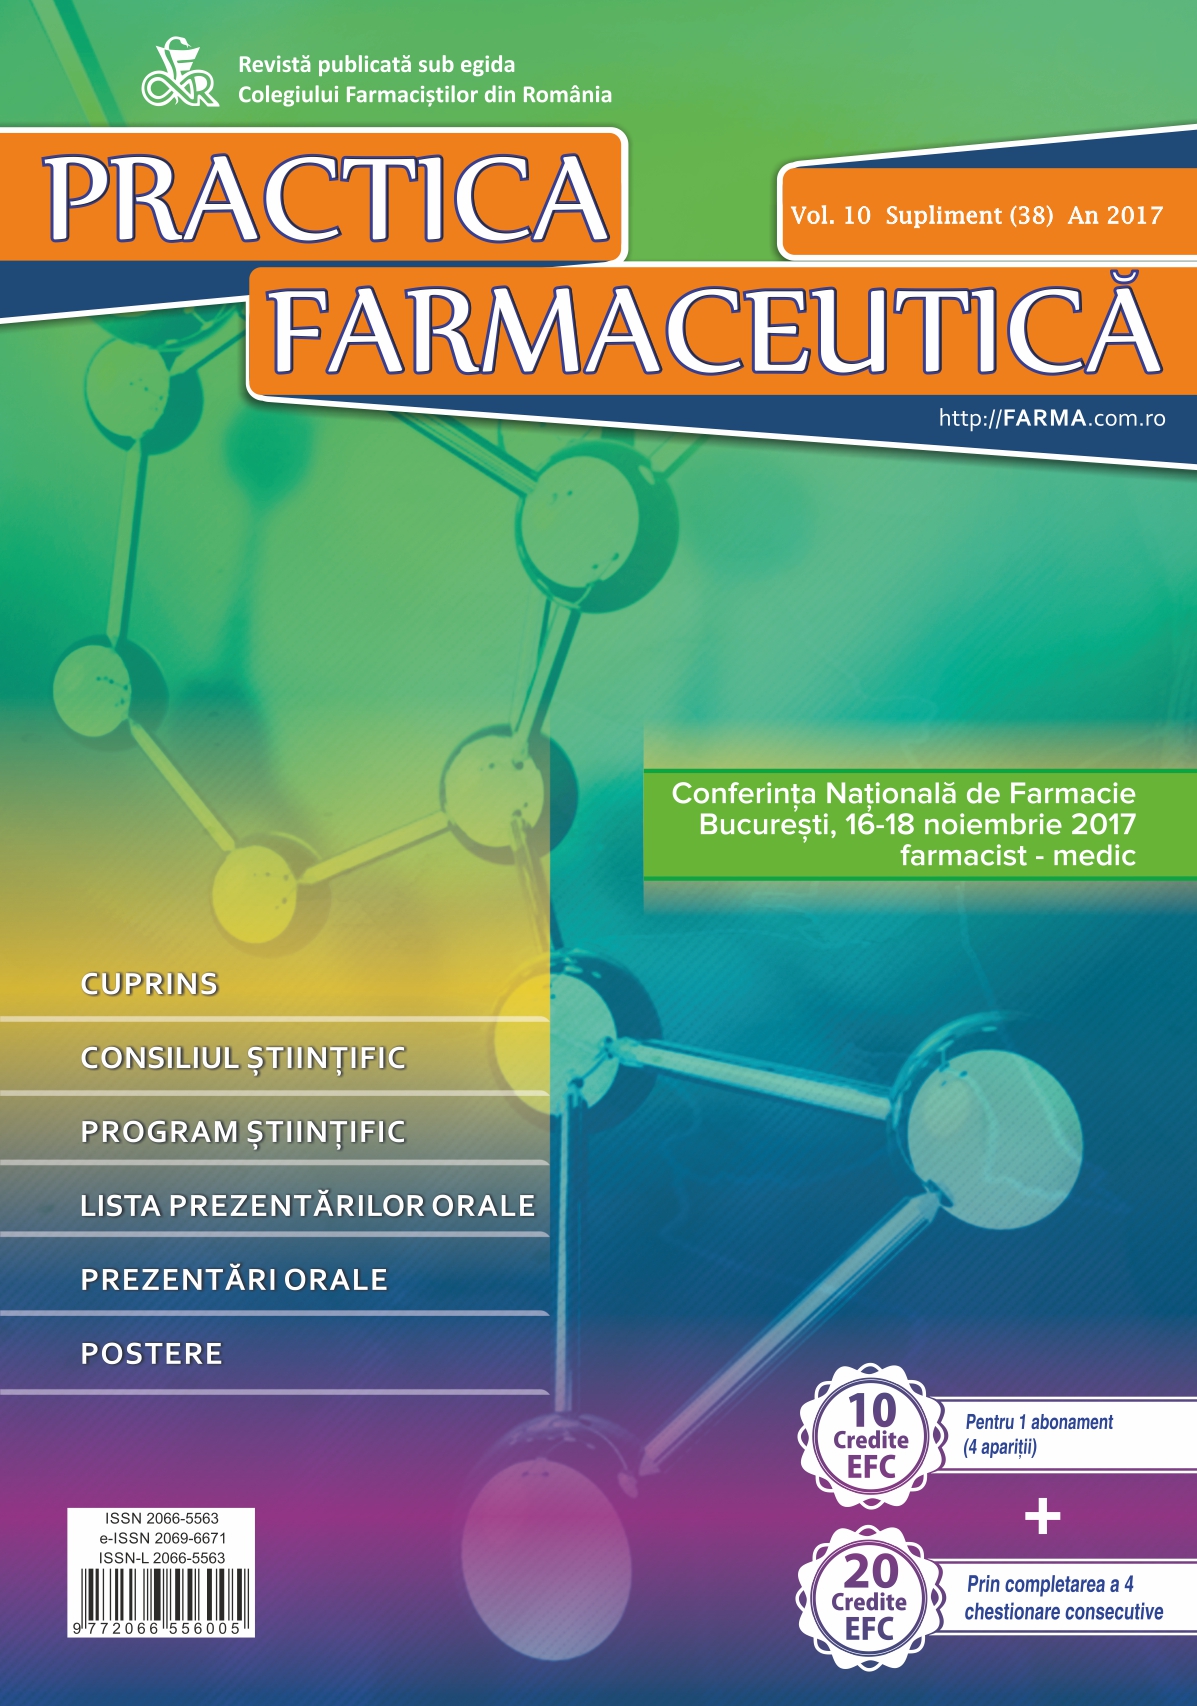 Revista Practica Farmaceutica, Vol. X, No. S (38), 2017